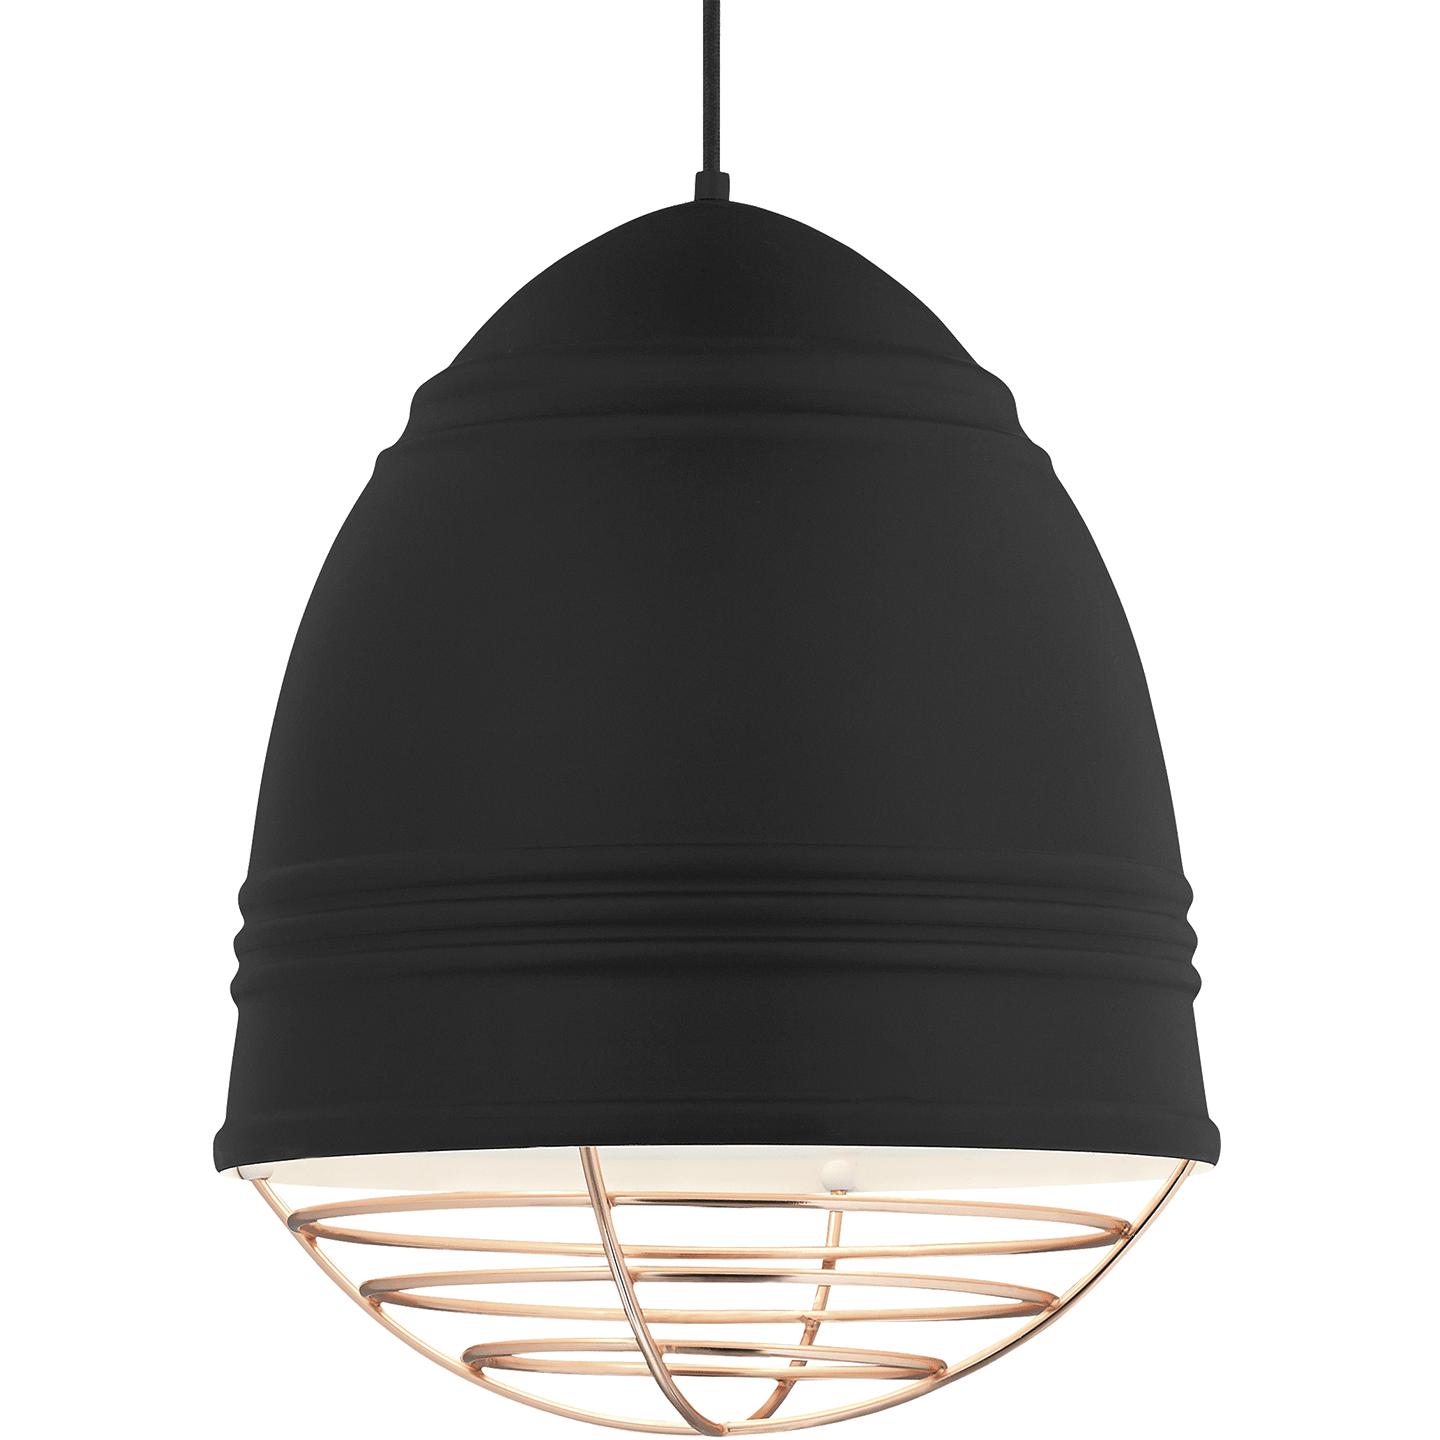 Rubberized Black w/ White Interior Lamp Not Included Copper